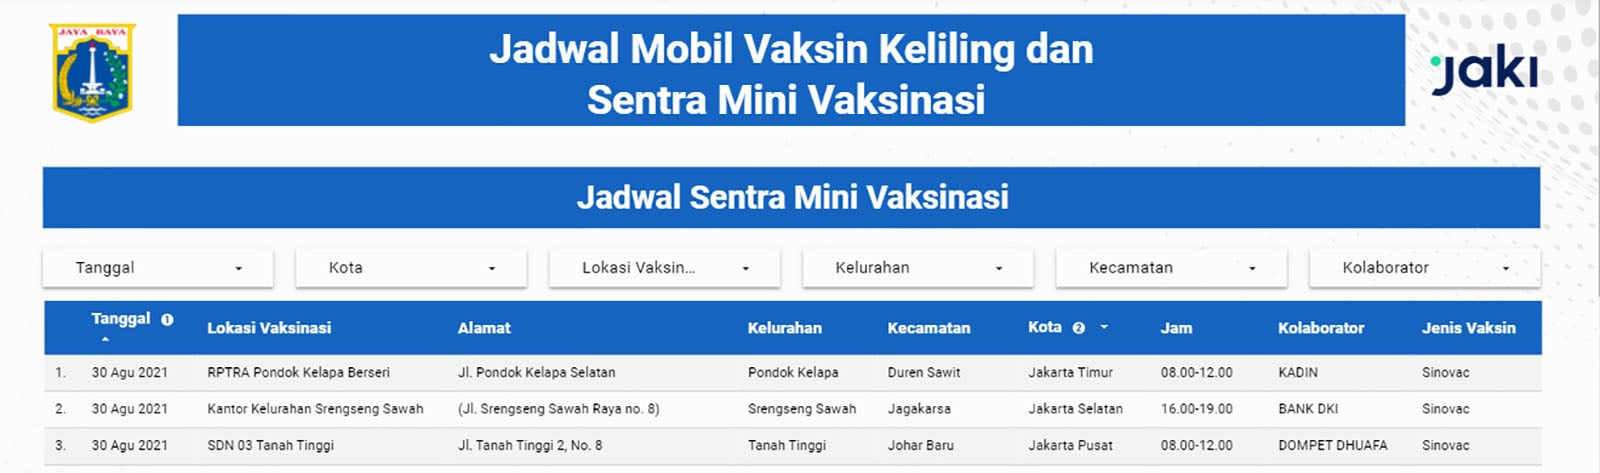 Jadwal Mobil vaksin Sentra Mini Jakarta 30